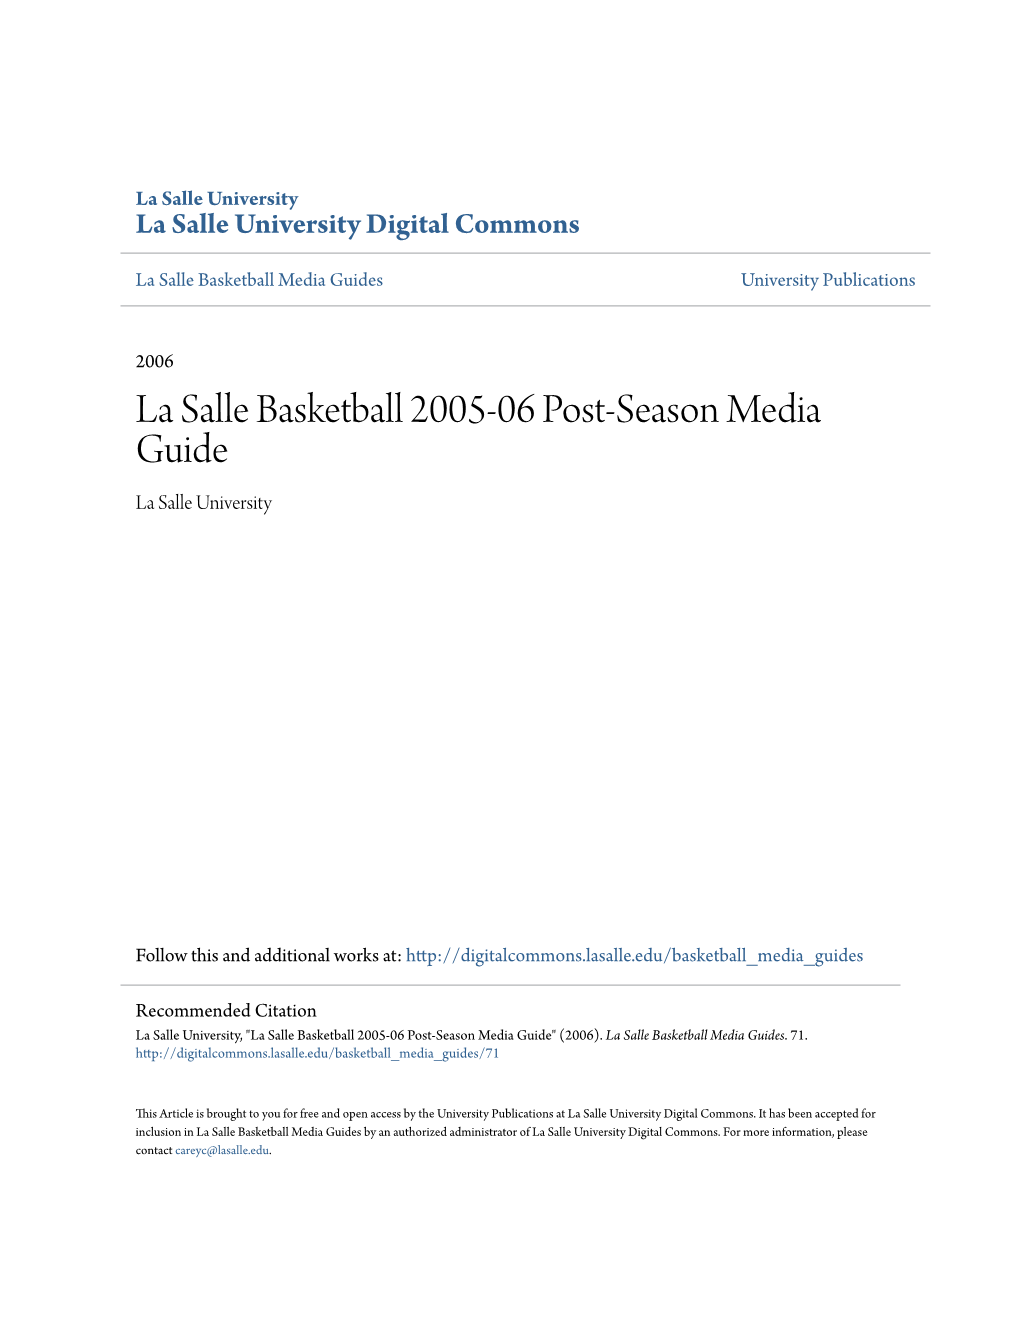 La Salle Basketball 2005-06 Post-Season Media Guide La Salle University